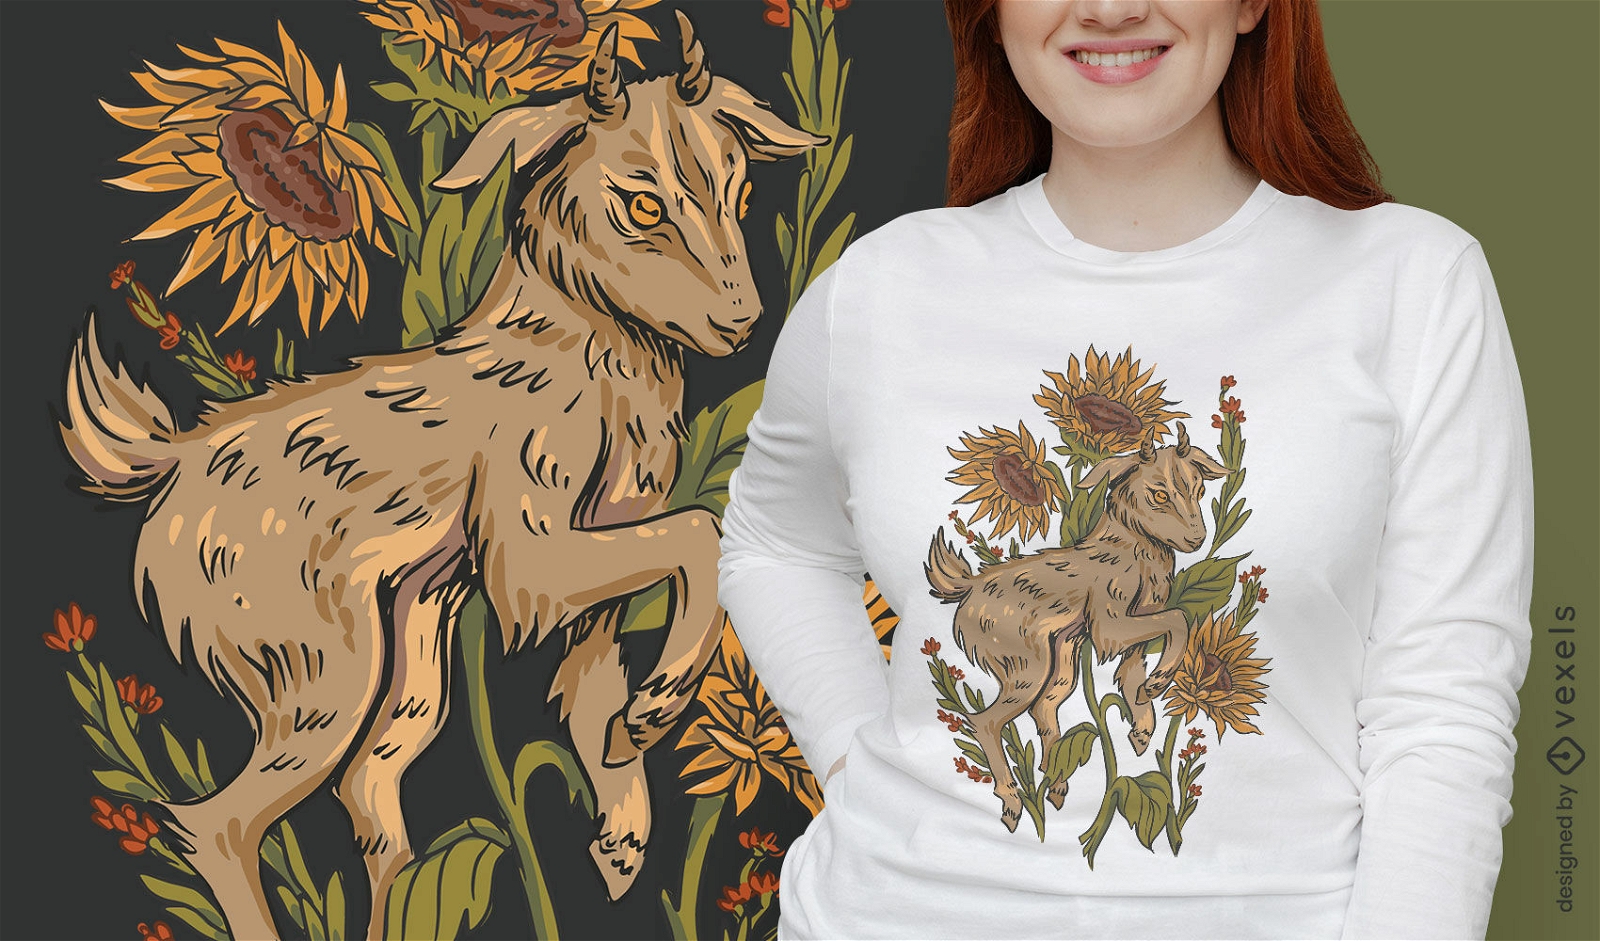 Baby goat forest illustration t-shirt design